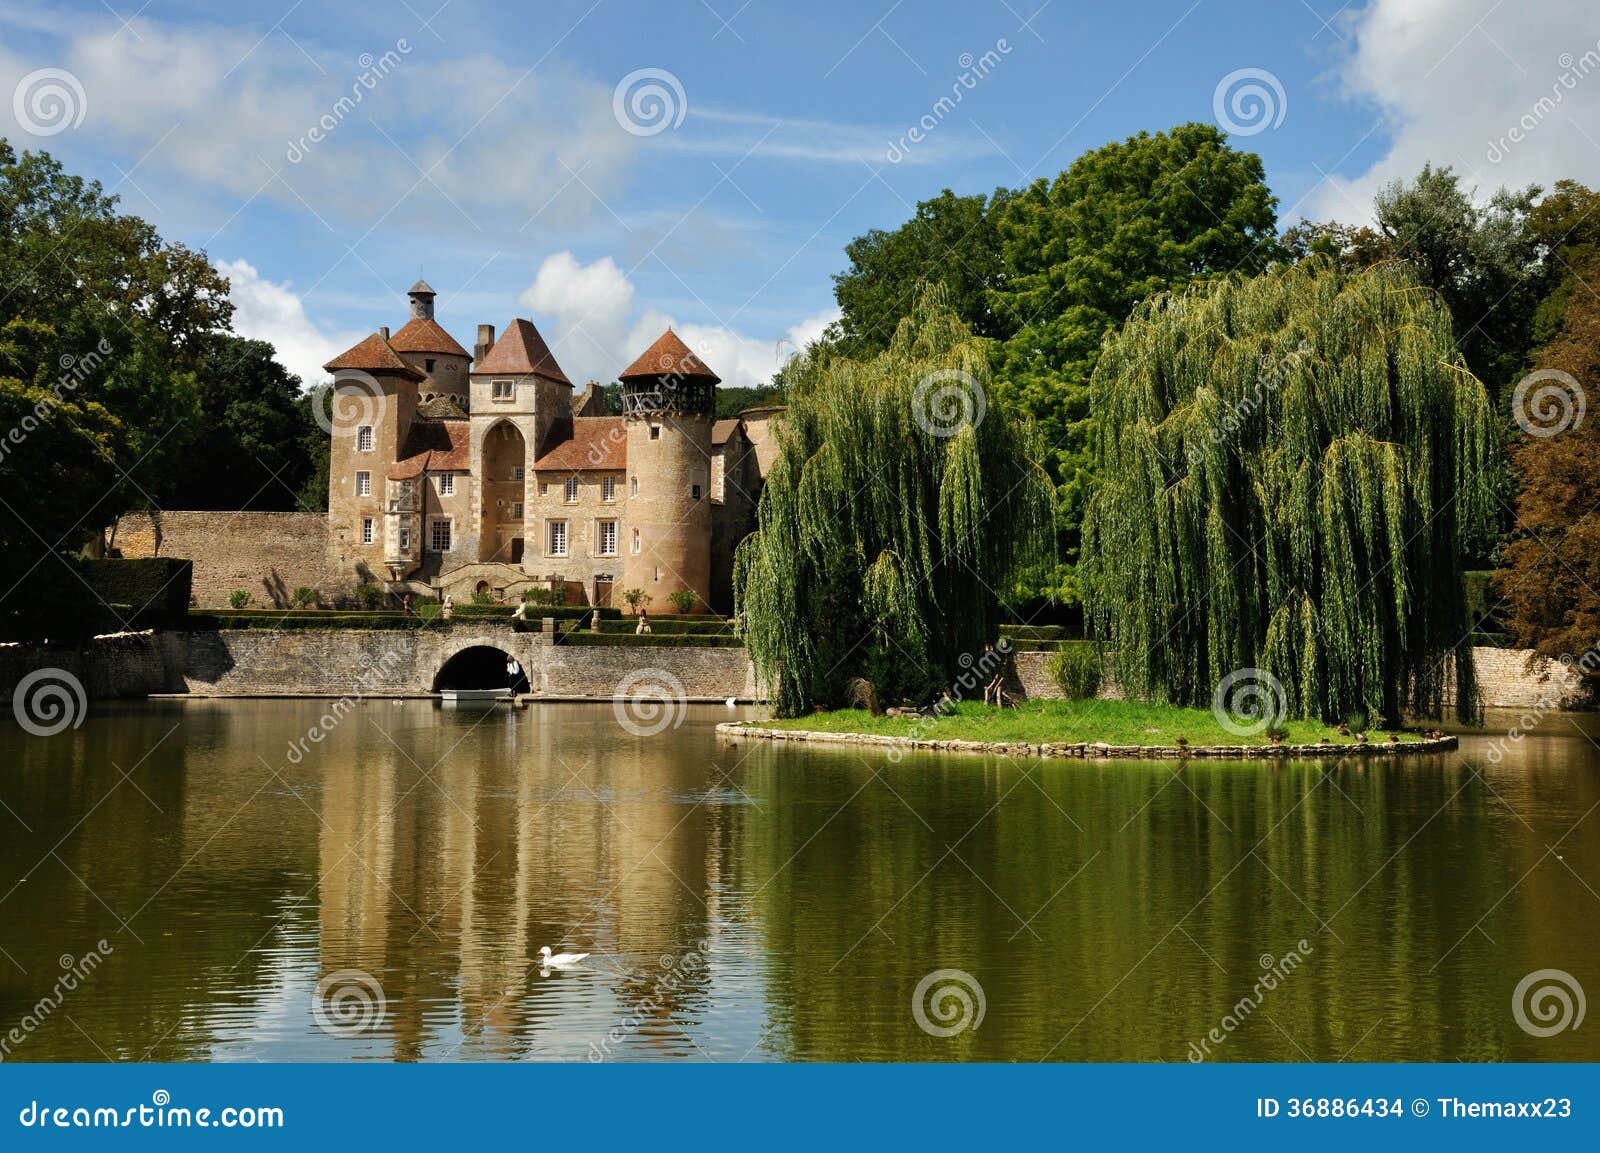 france, castle in champagne region